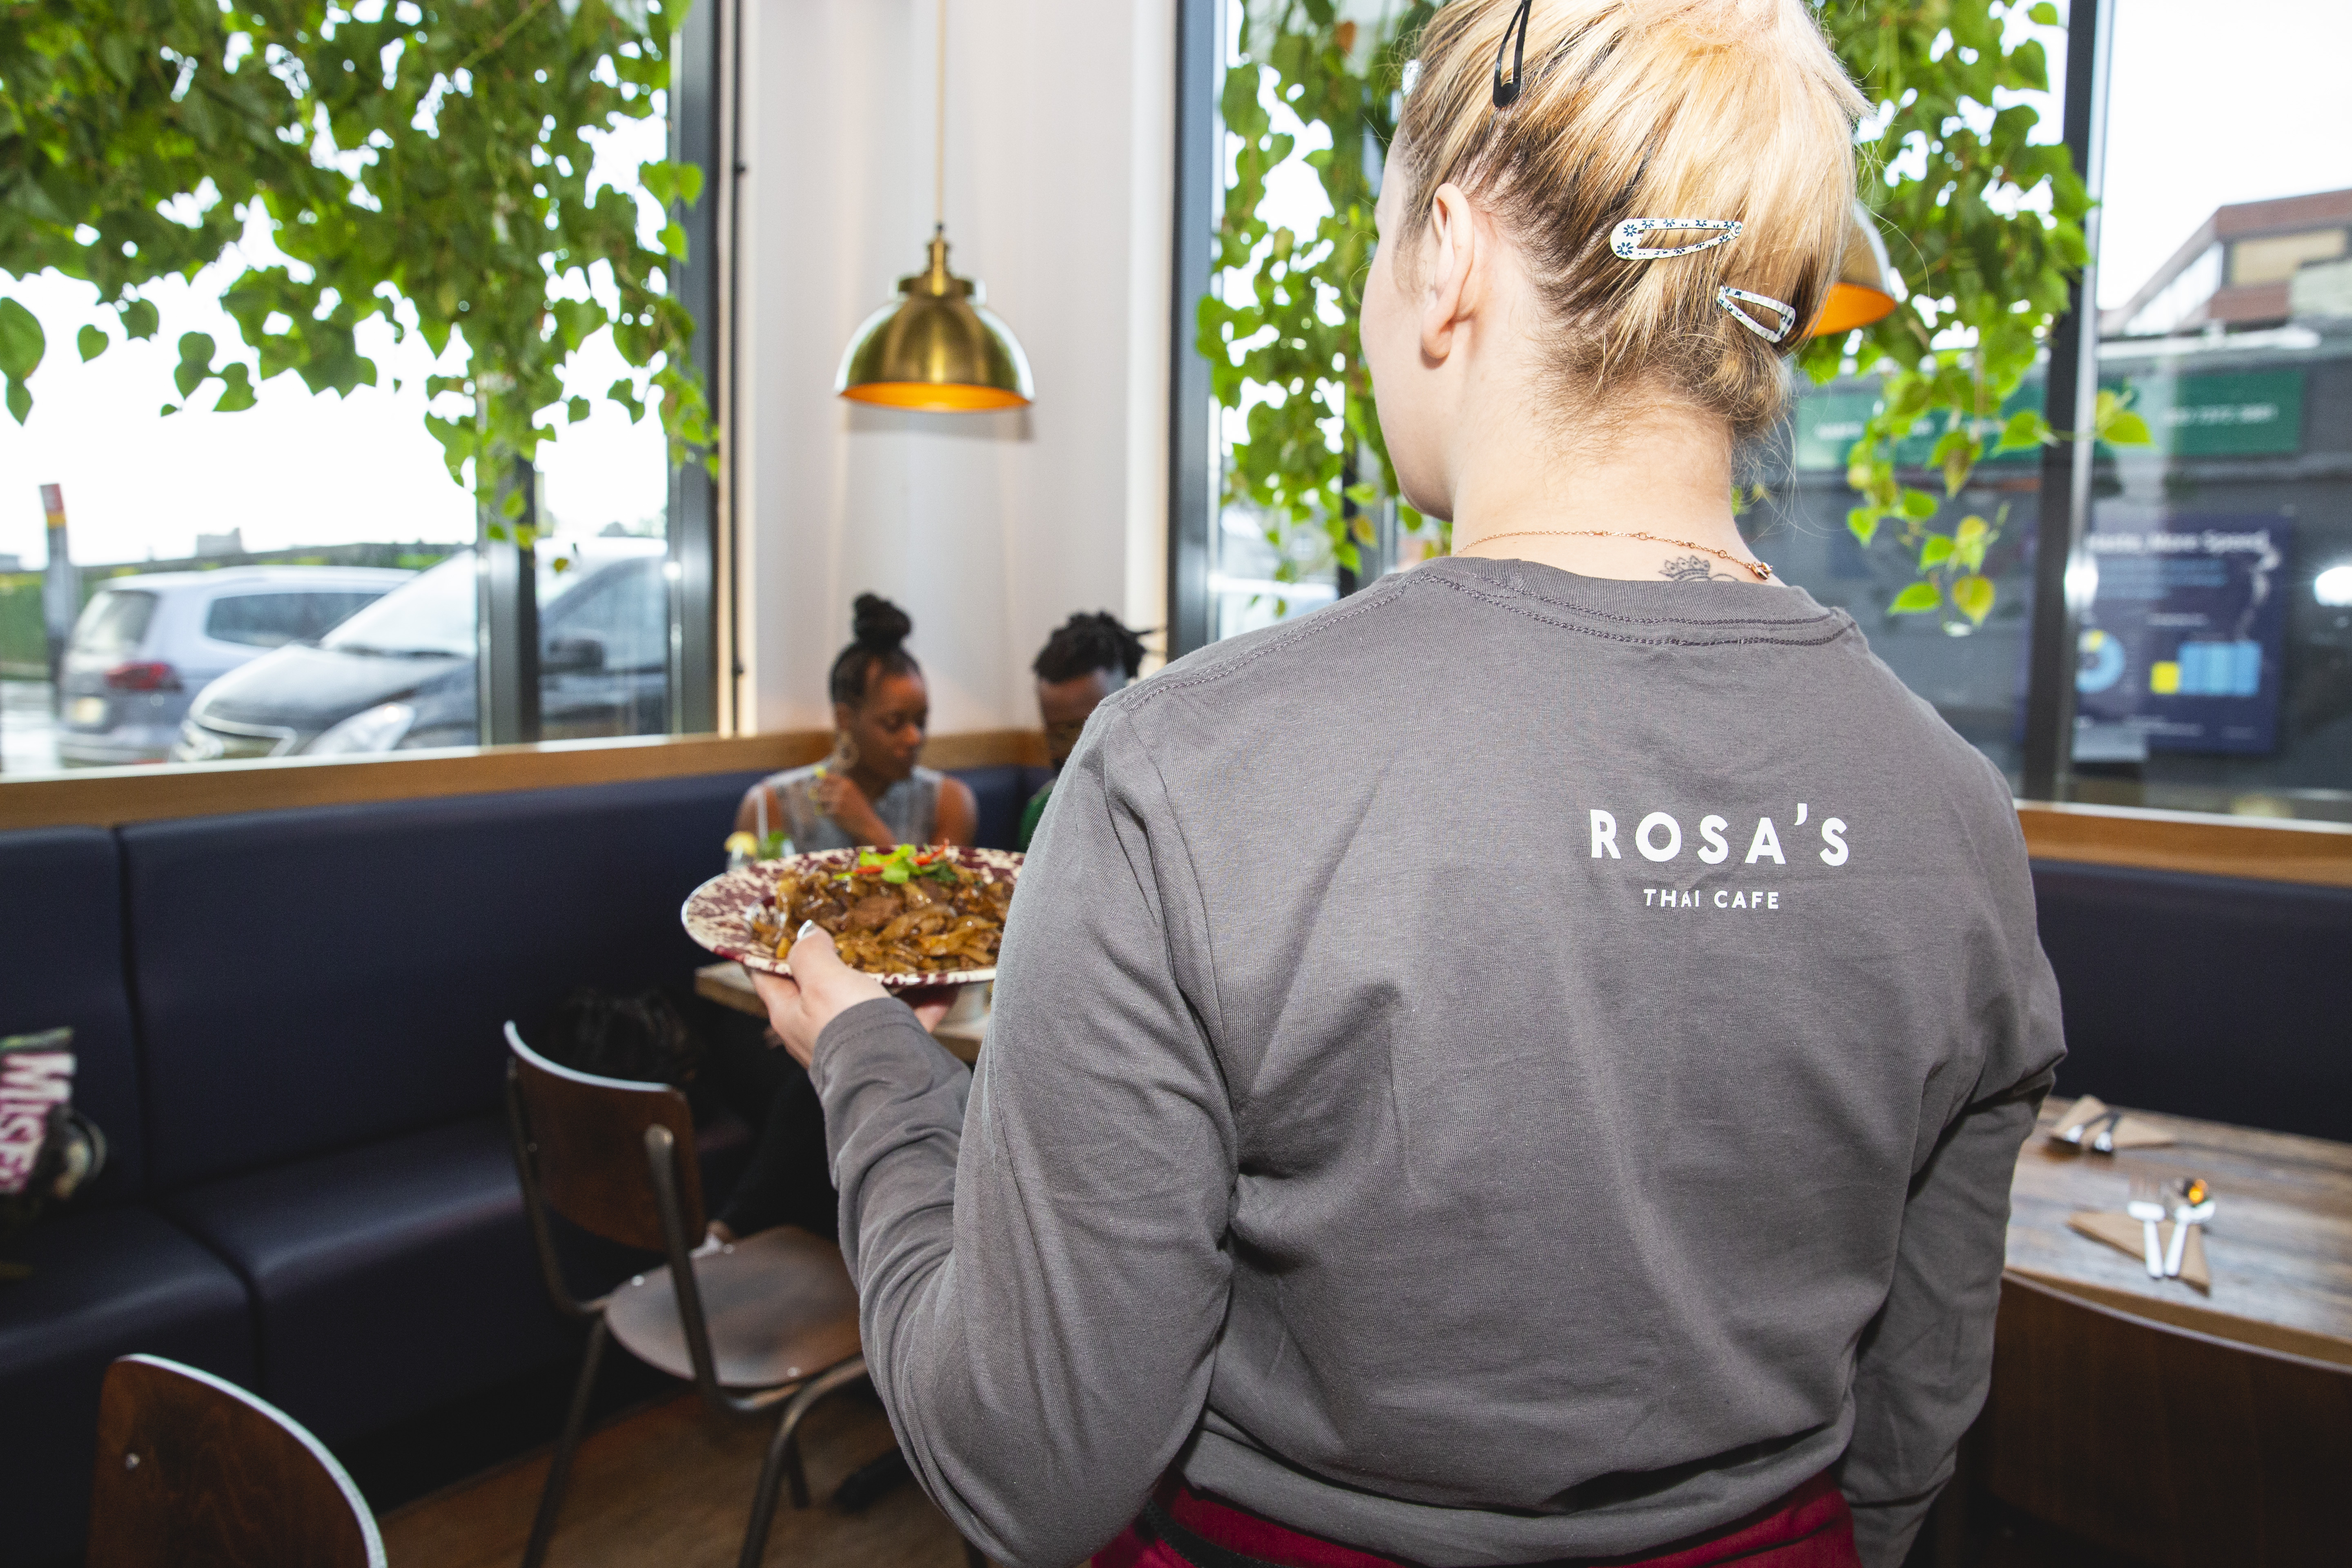 Rosa's Thai Cafe photo promotion shoot